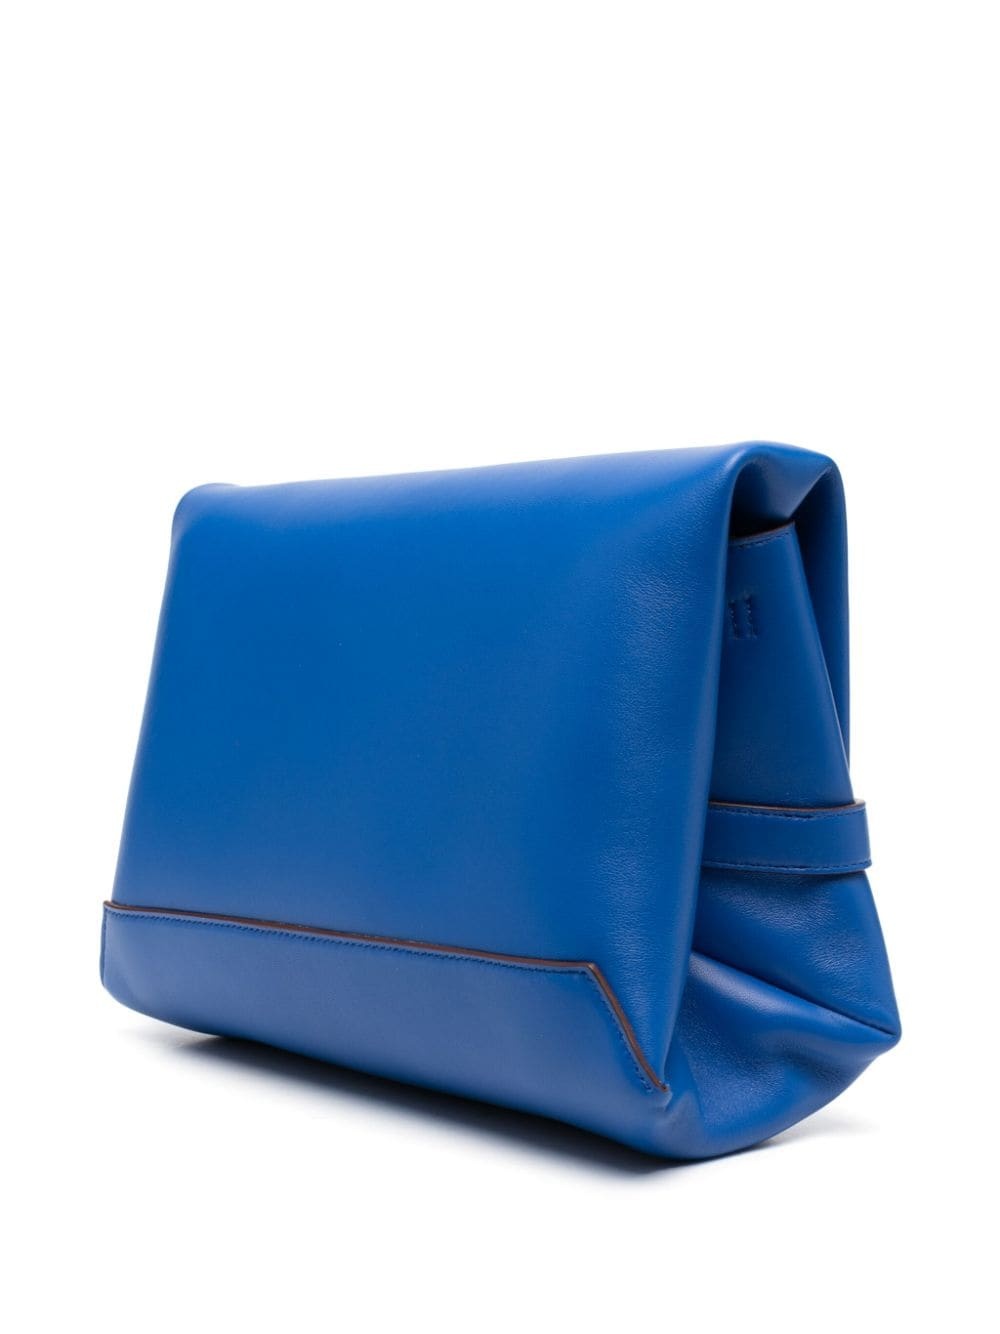 Victoria Beckham Chain Pouch Leather Shoulder Bag - Bergdorf Goodman